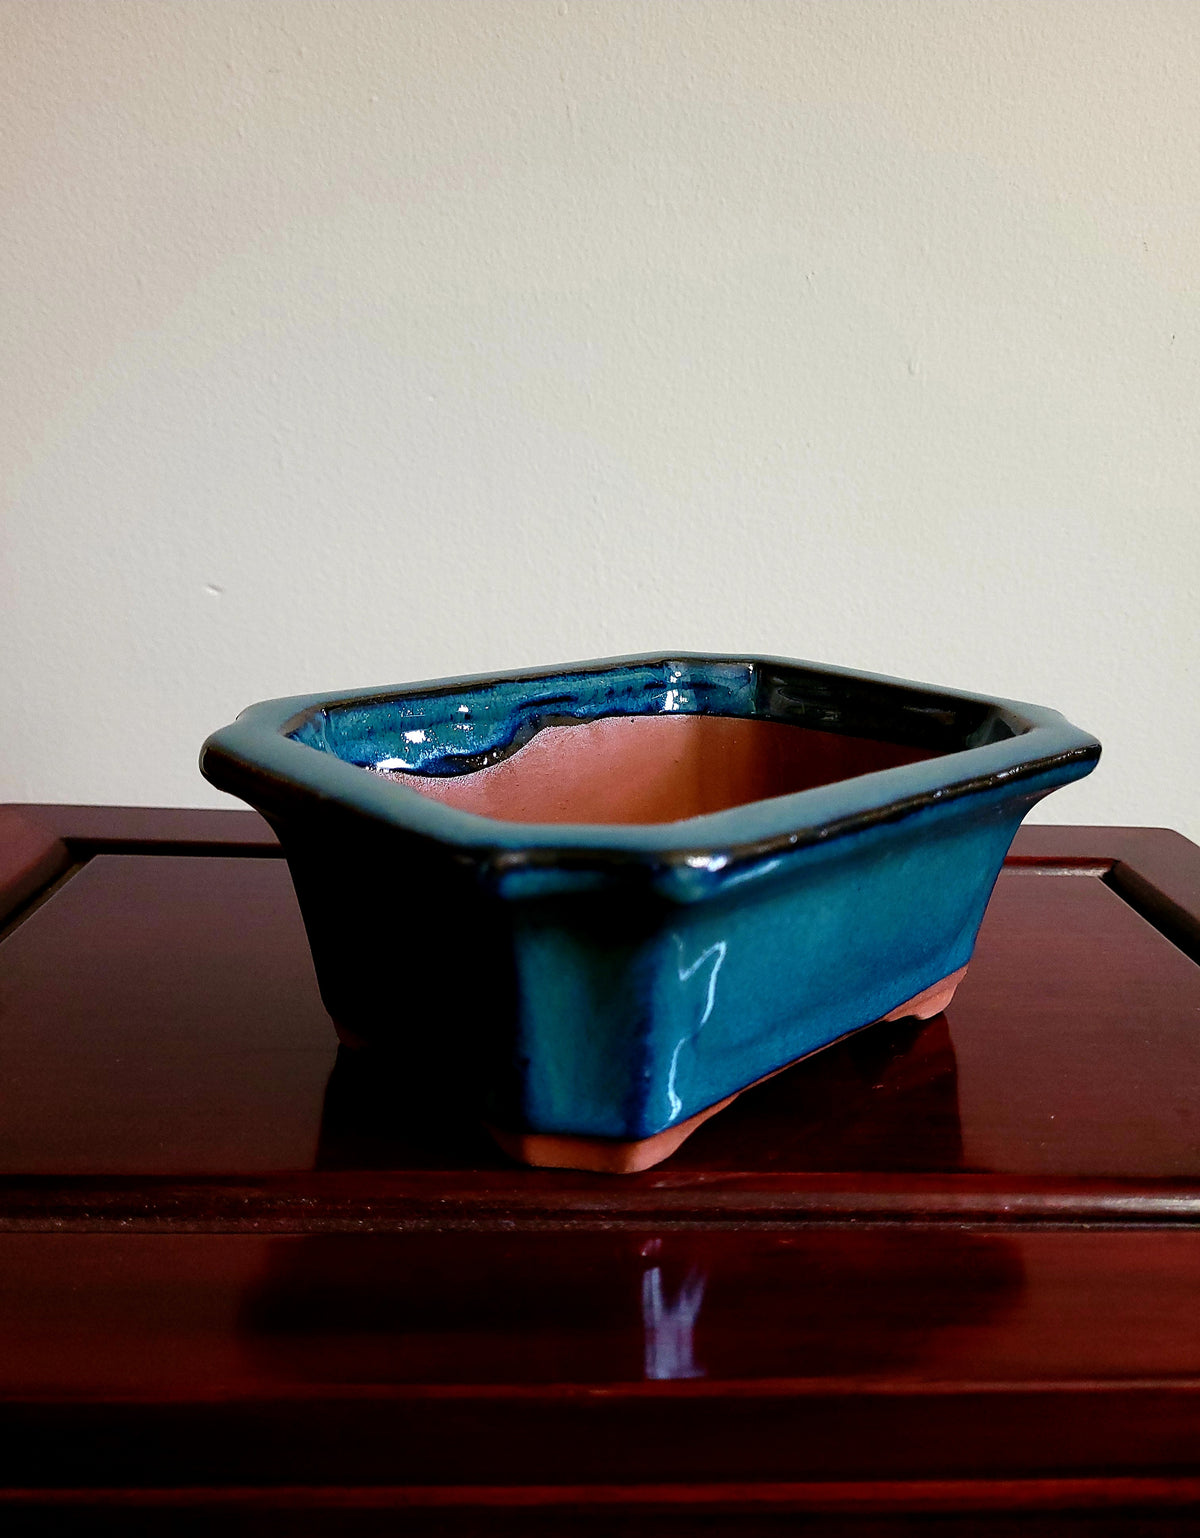 6"  sea green/blue rectangular chinese pot